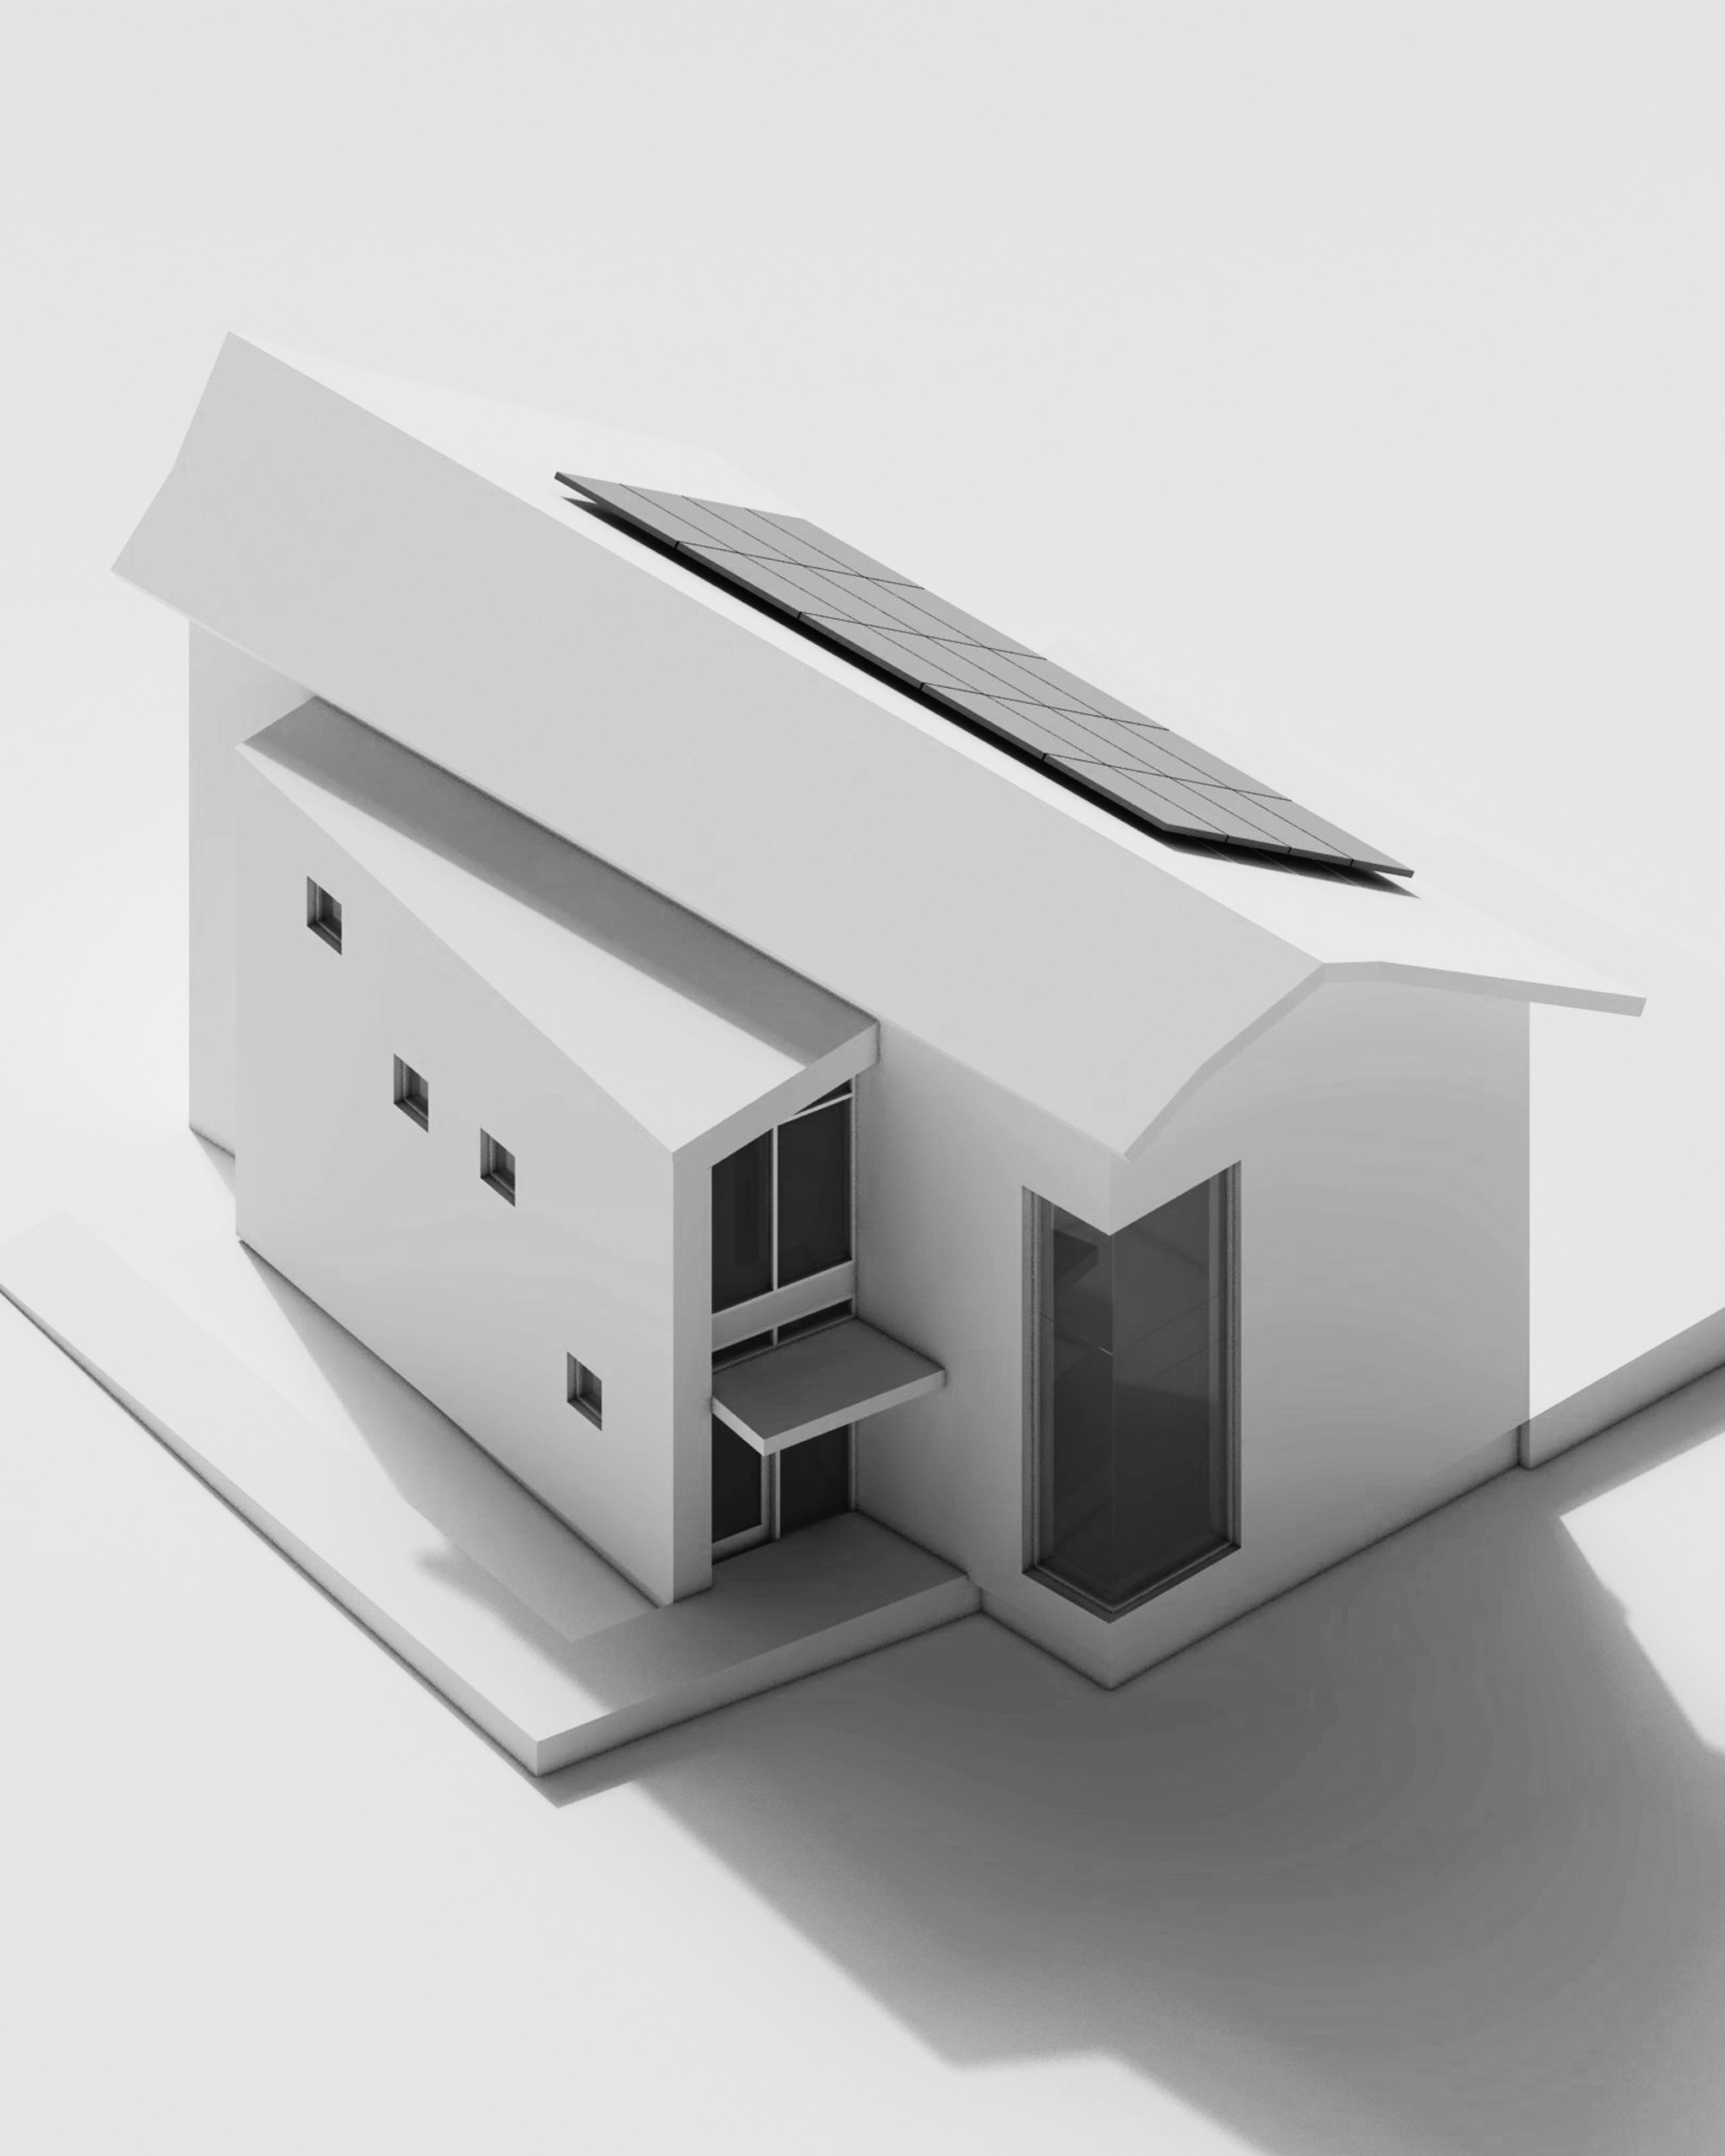 Ellman-Raiselis Passive House model